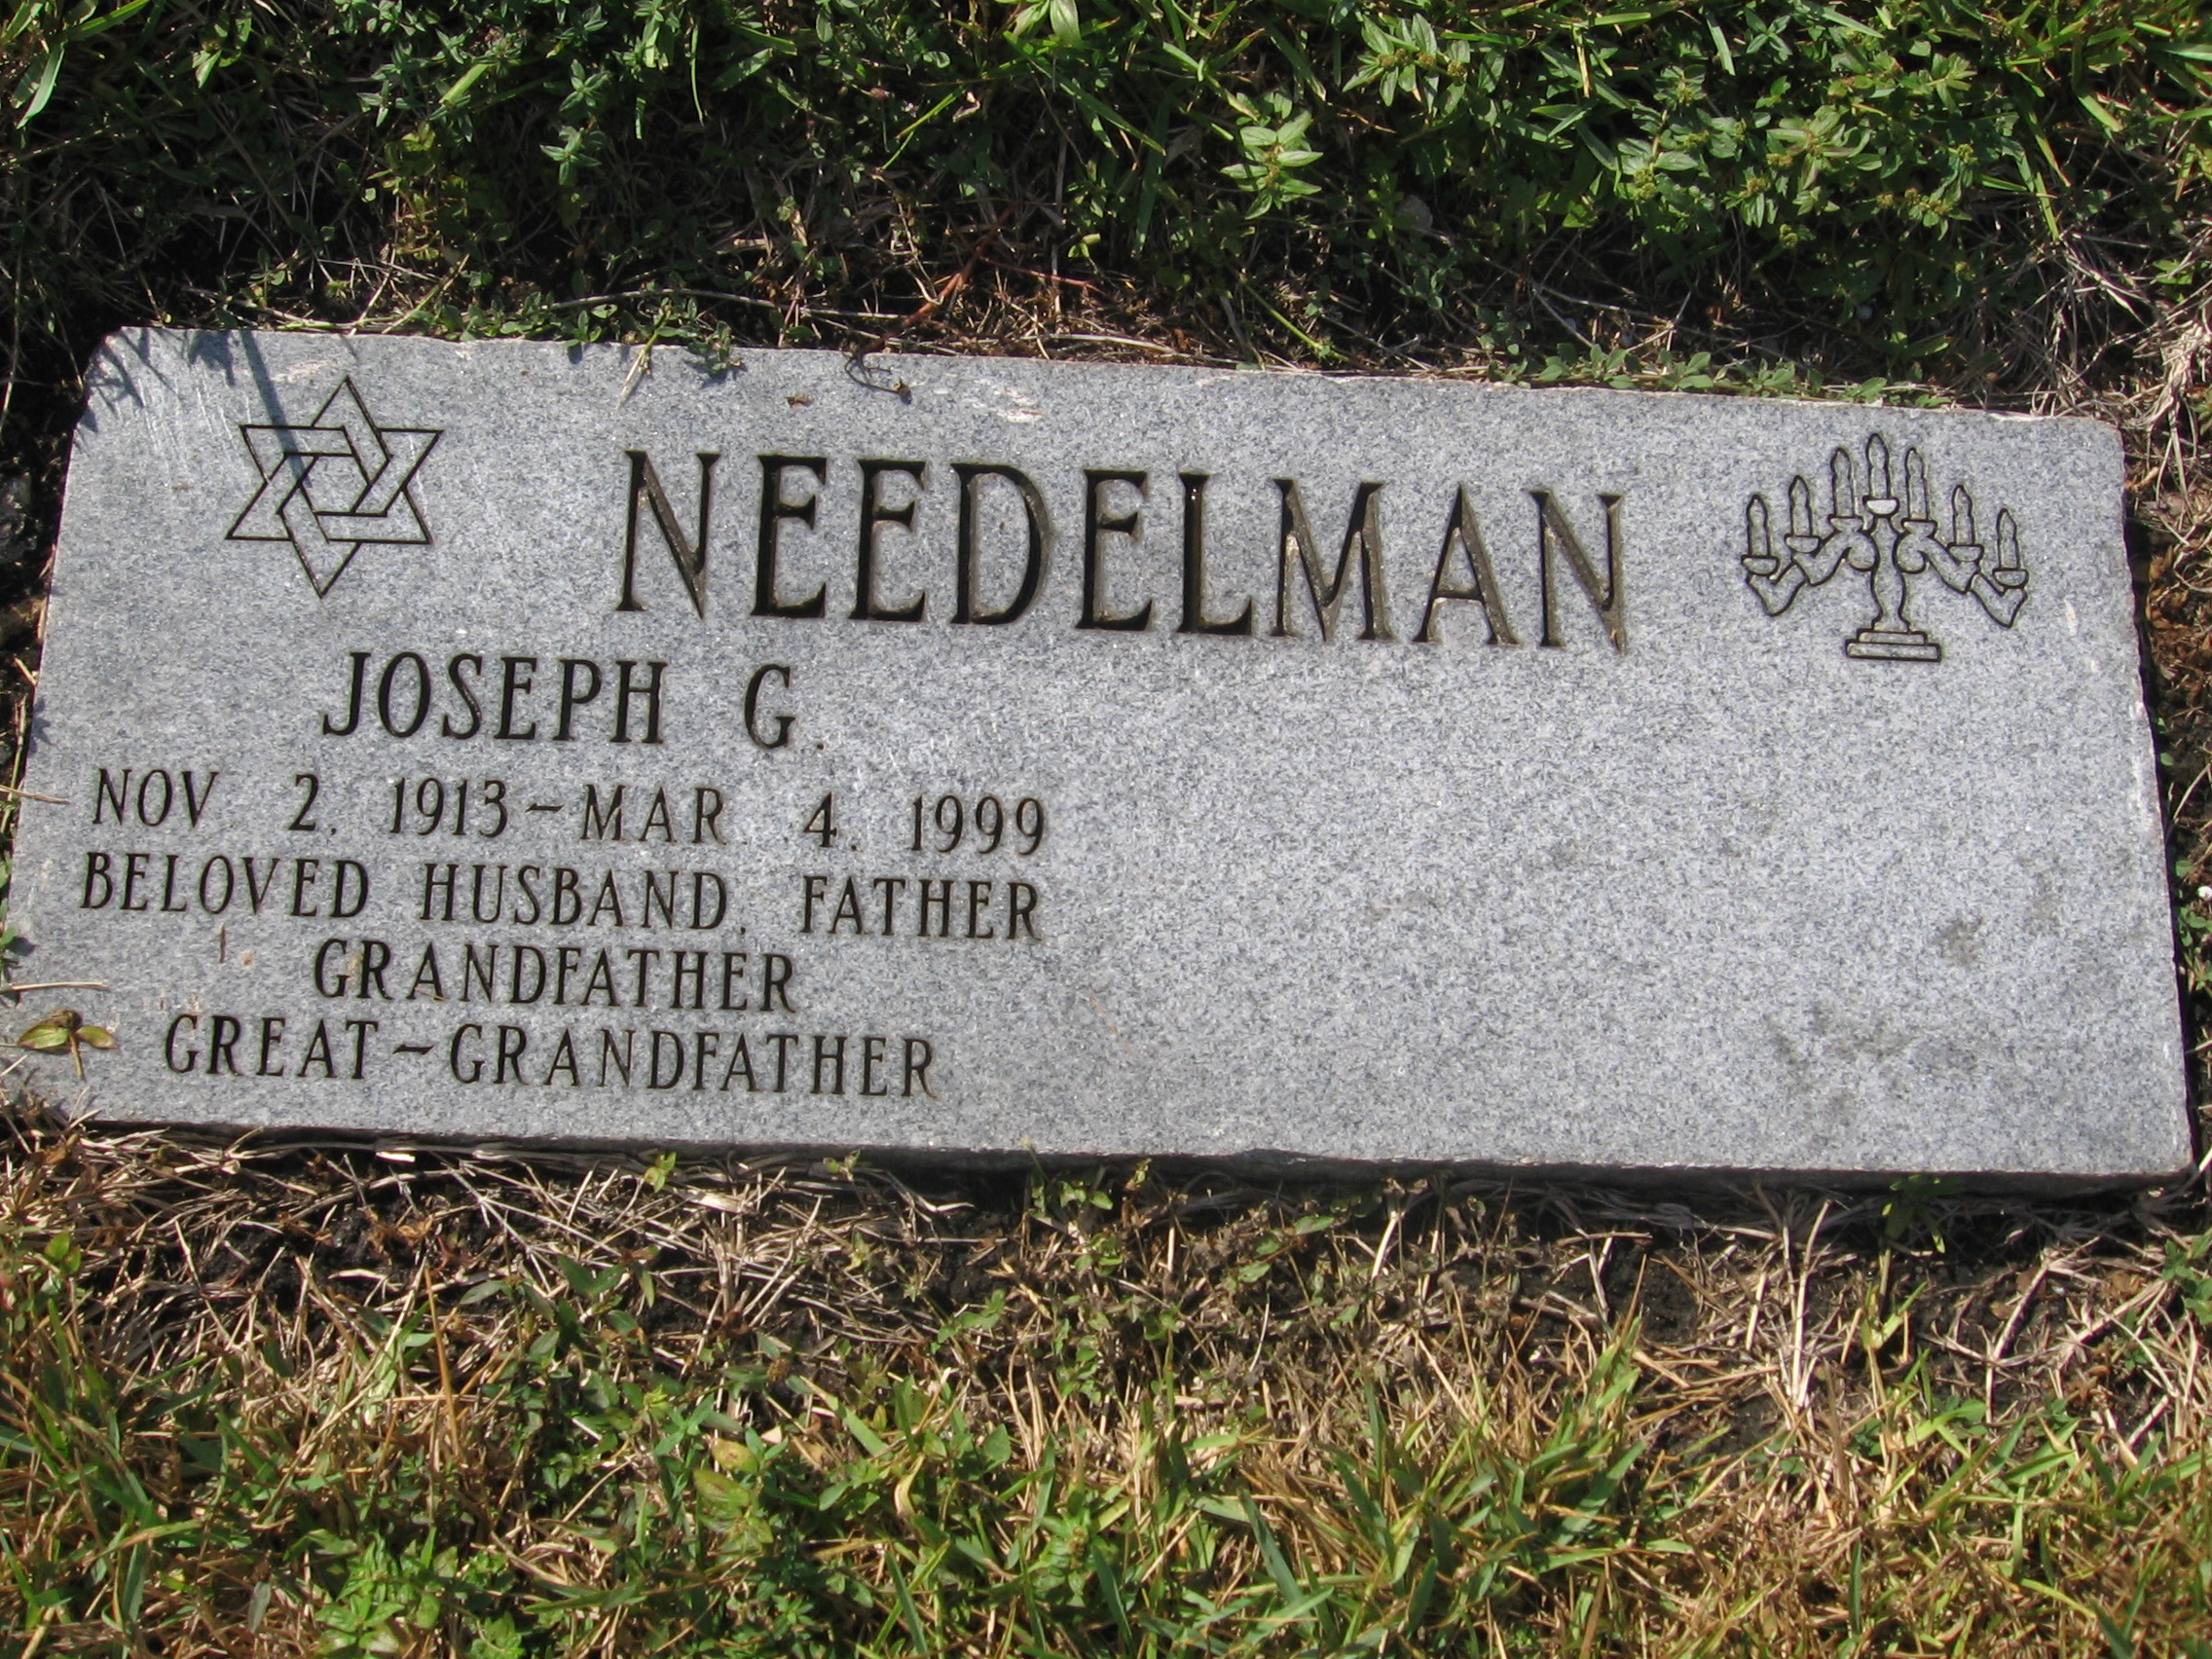 Joseph G Needelman